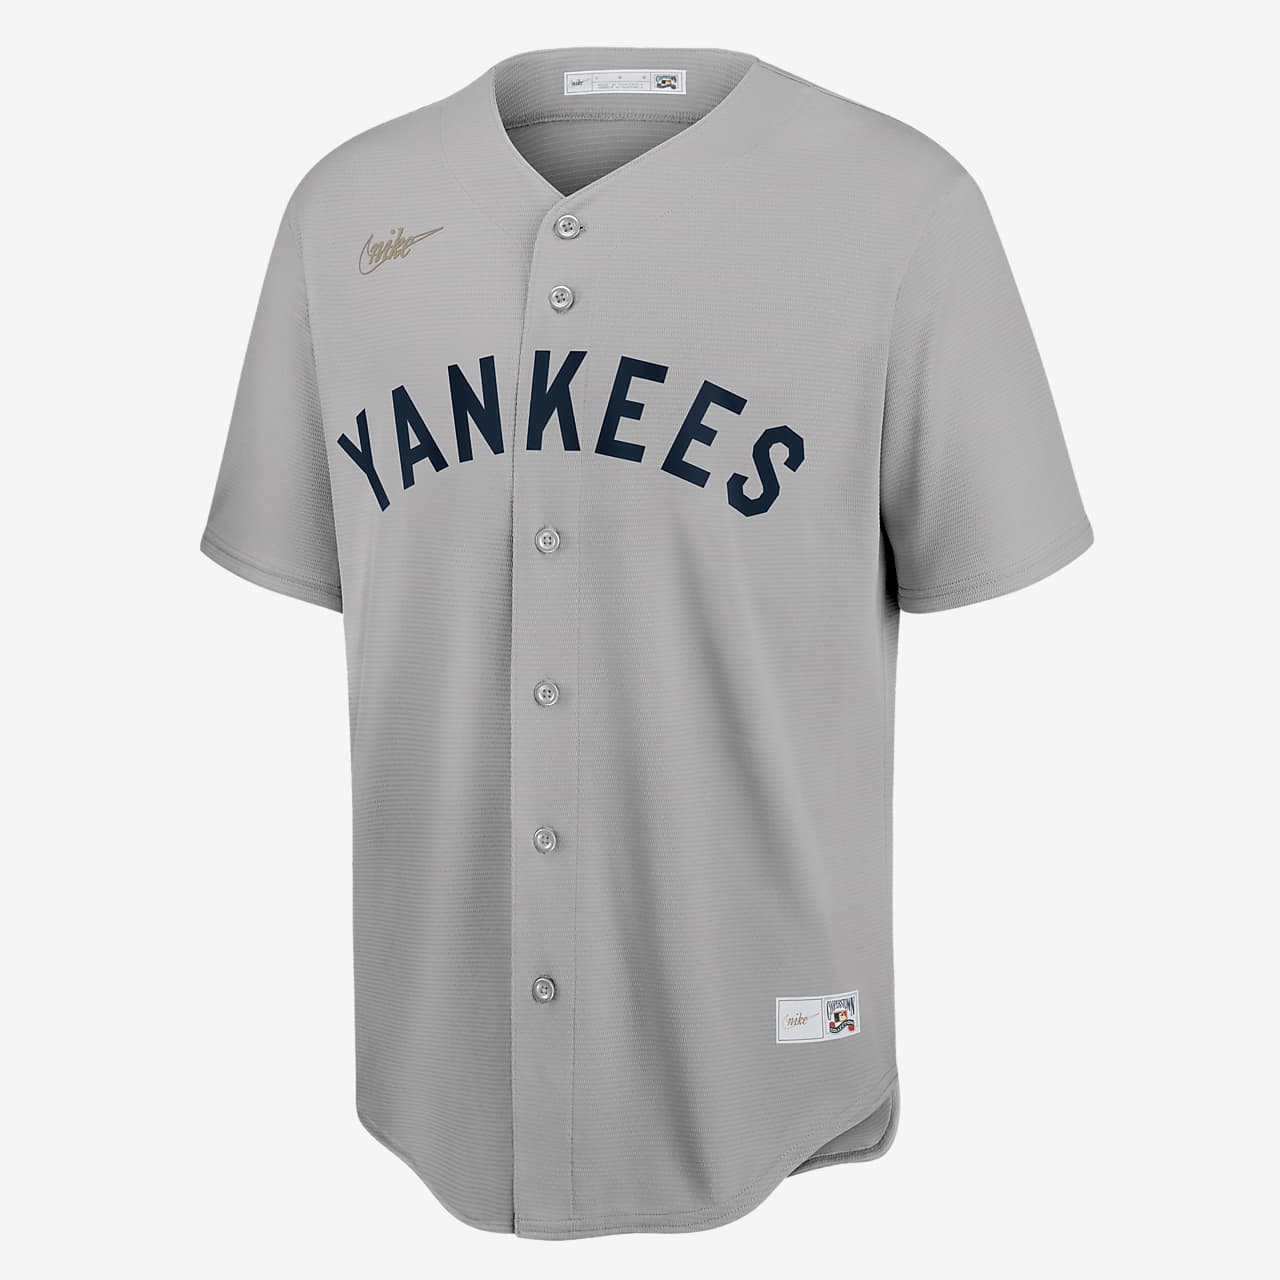 new york baseball top